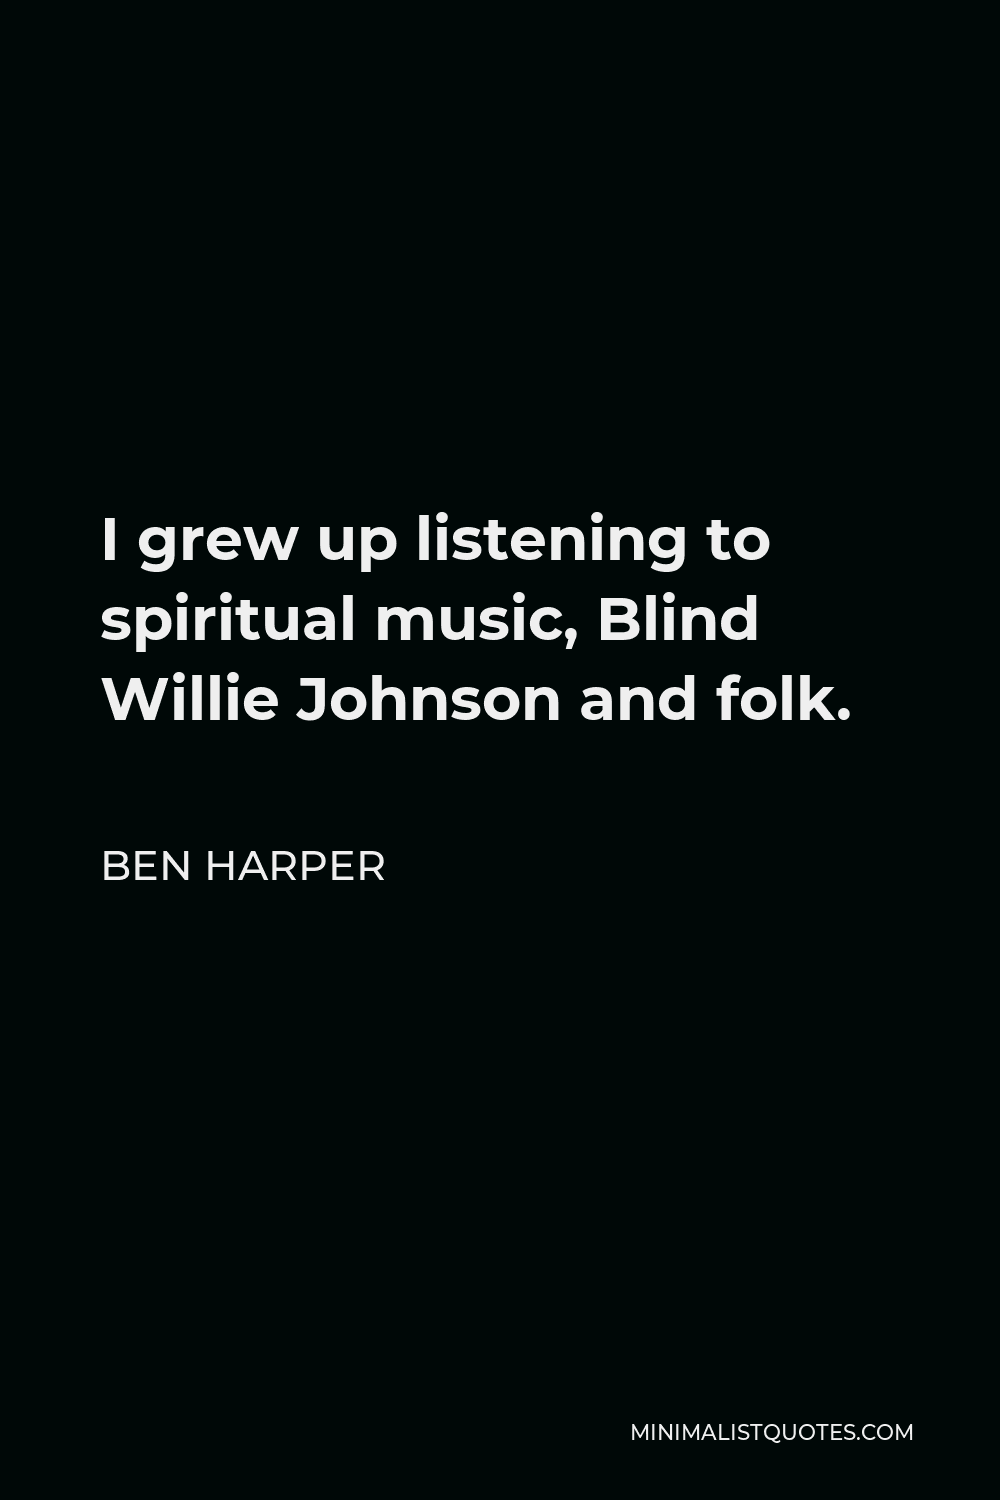 Ben Harper Quote - I grew up listening to spiritual music, Blind Willie Johnson and folk.